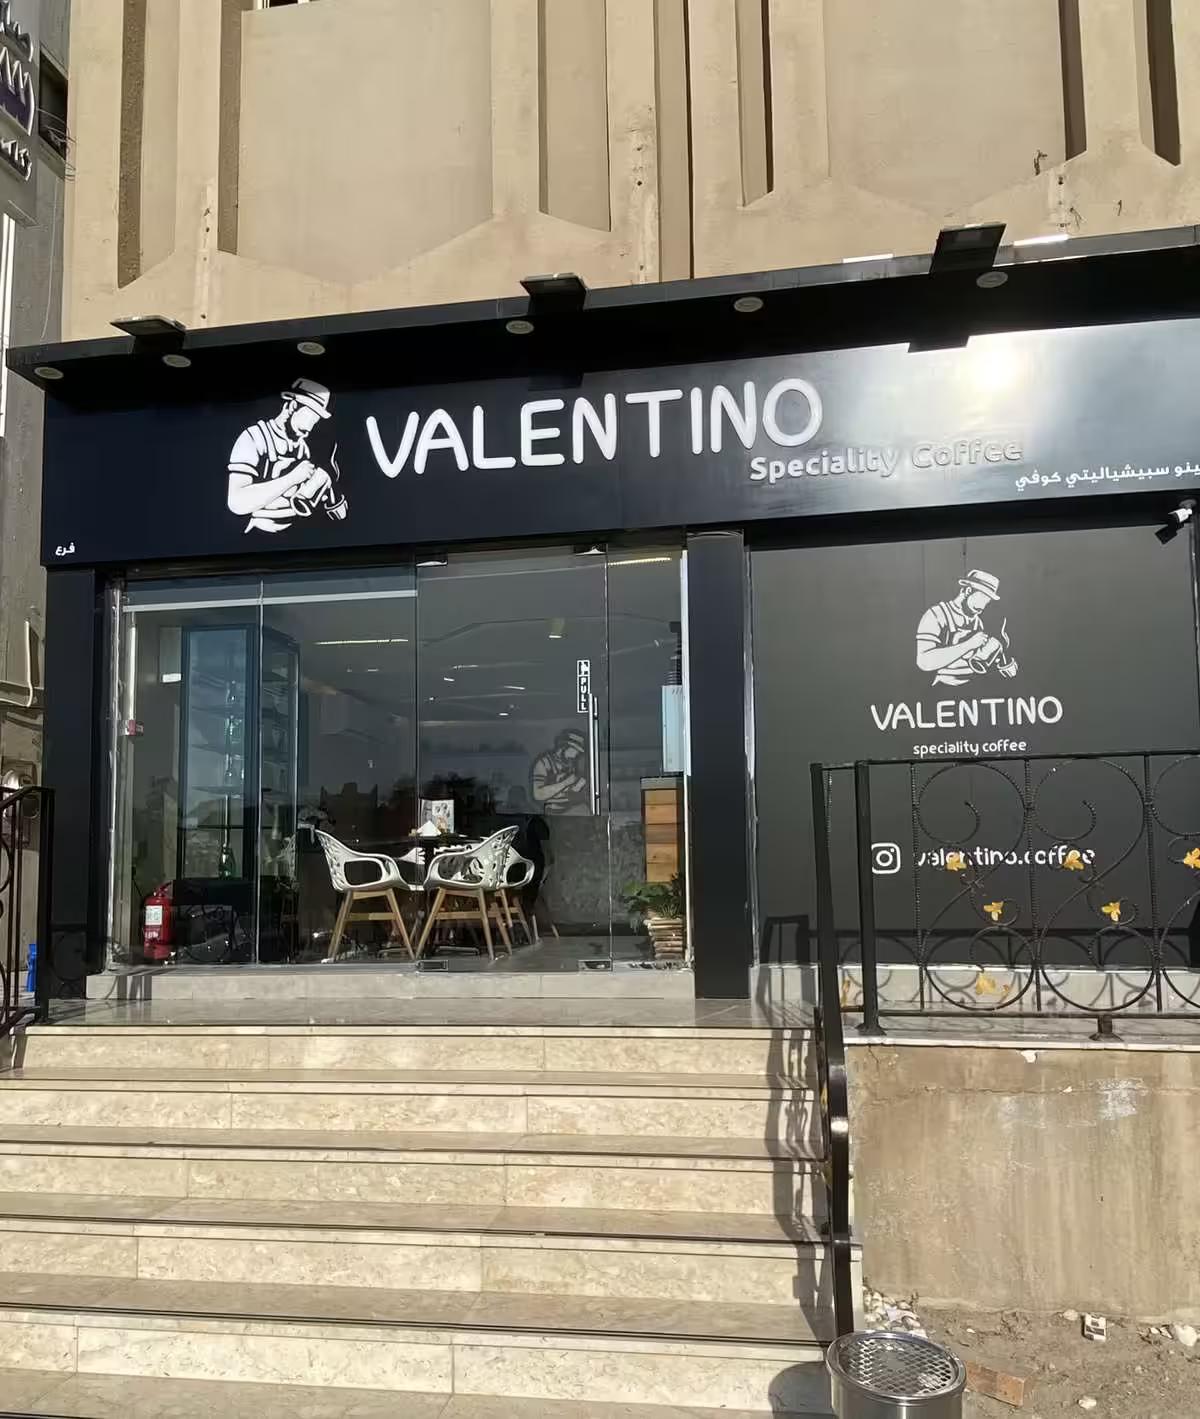 Valentino Speciality Coffee